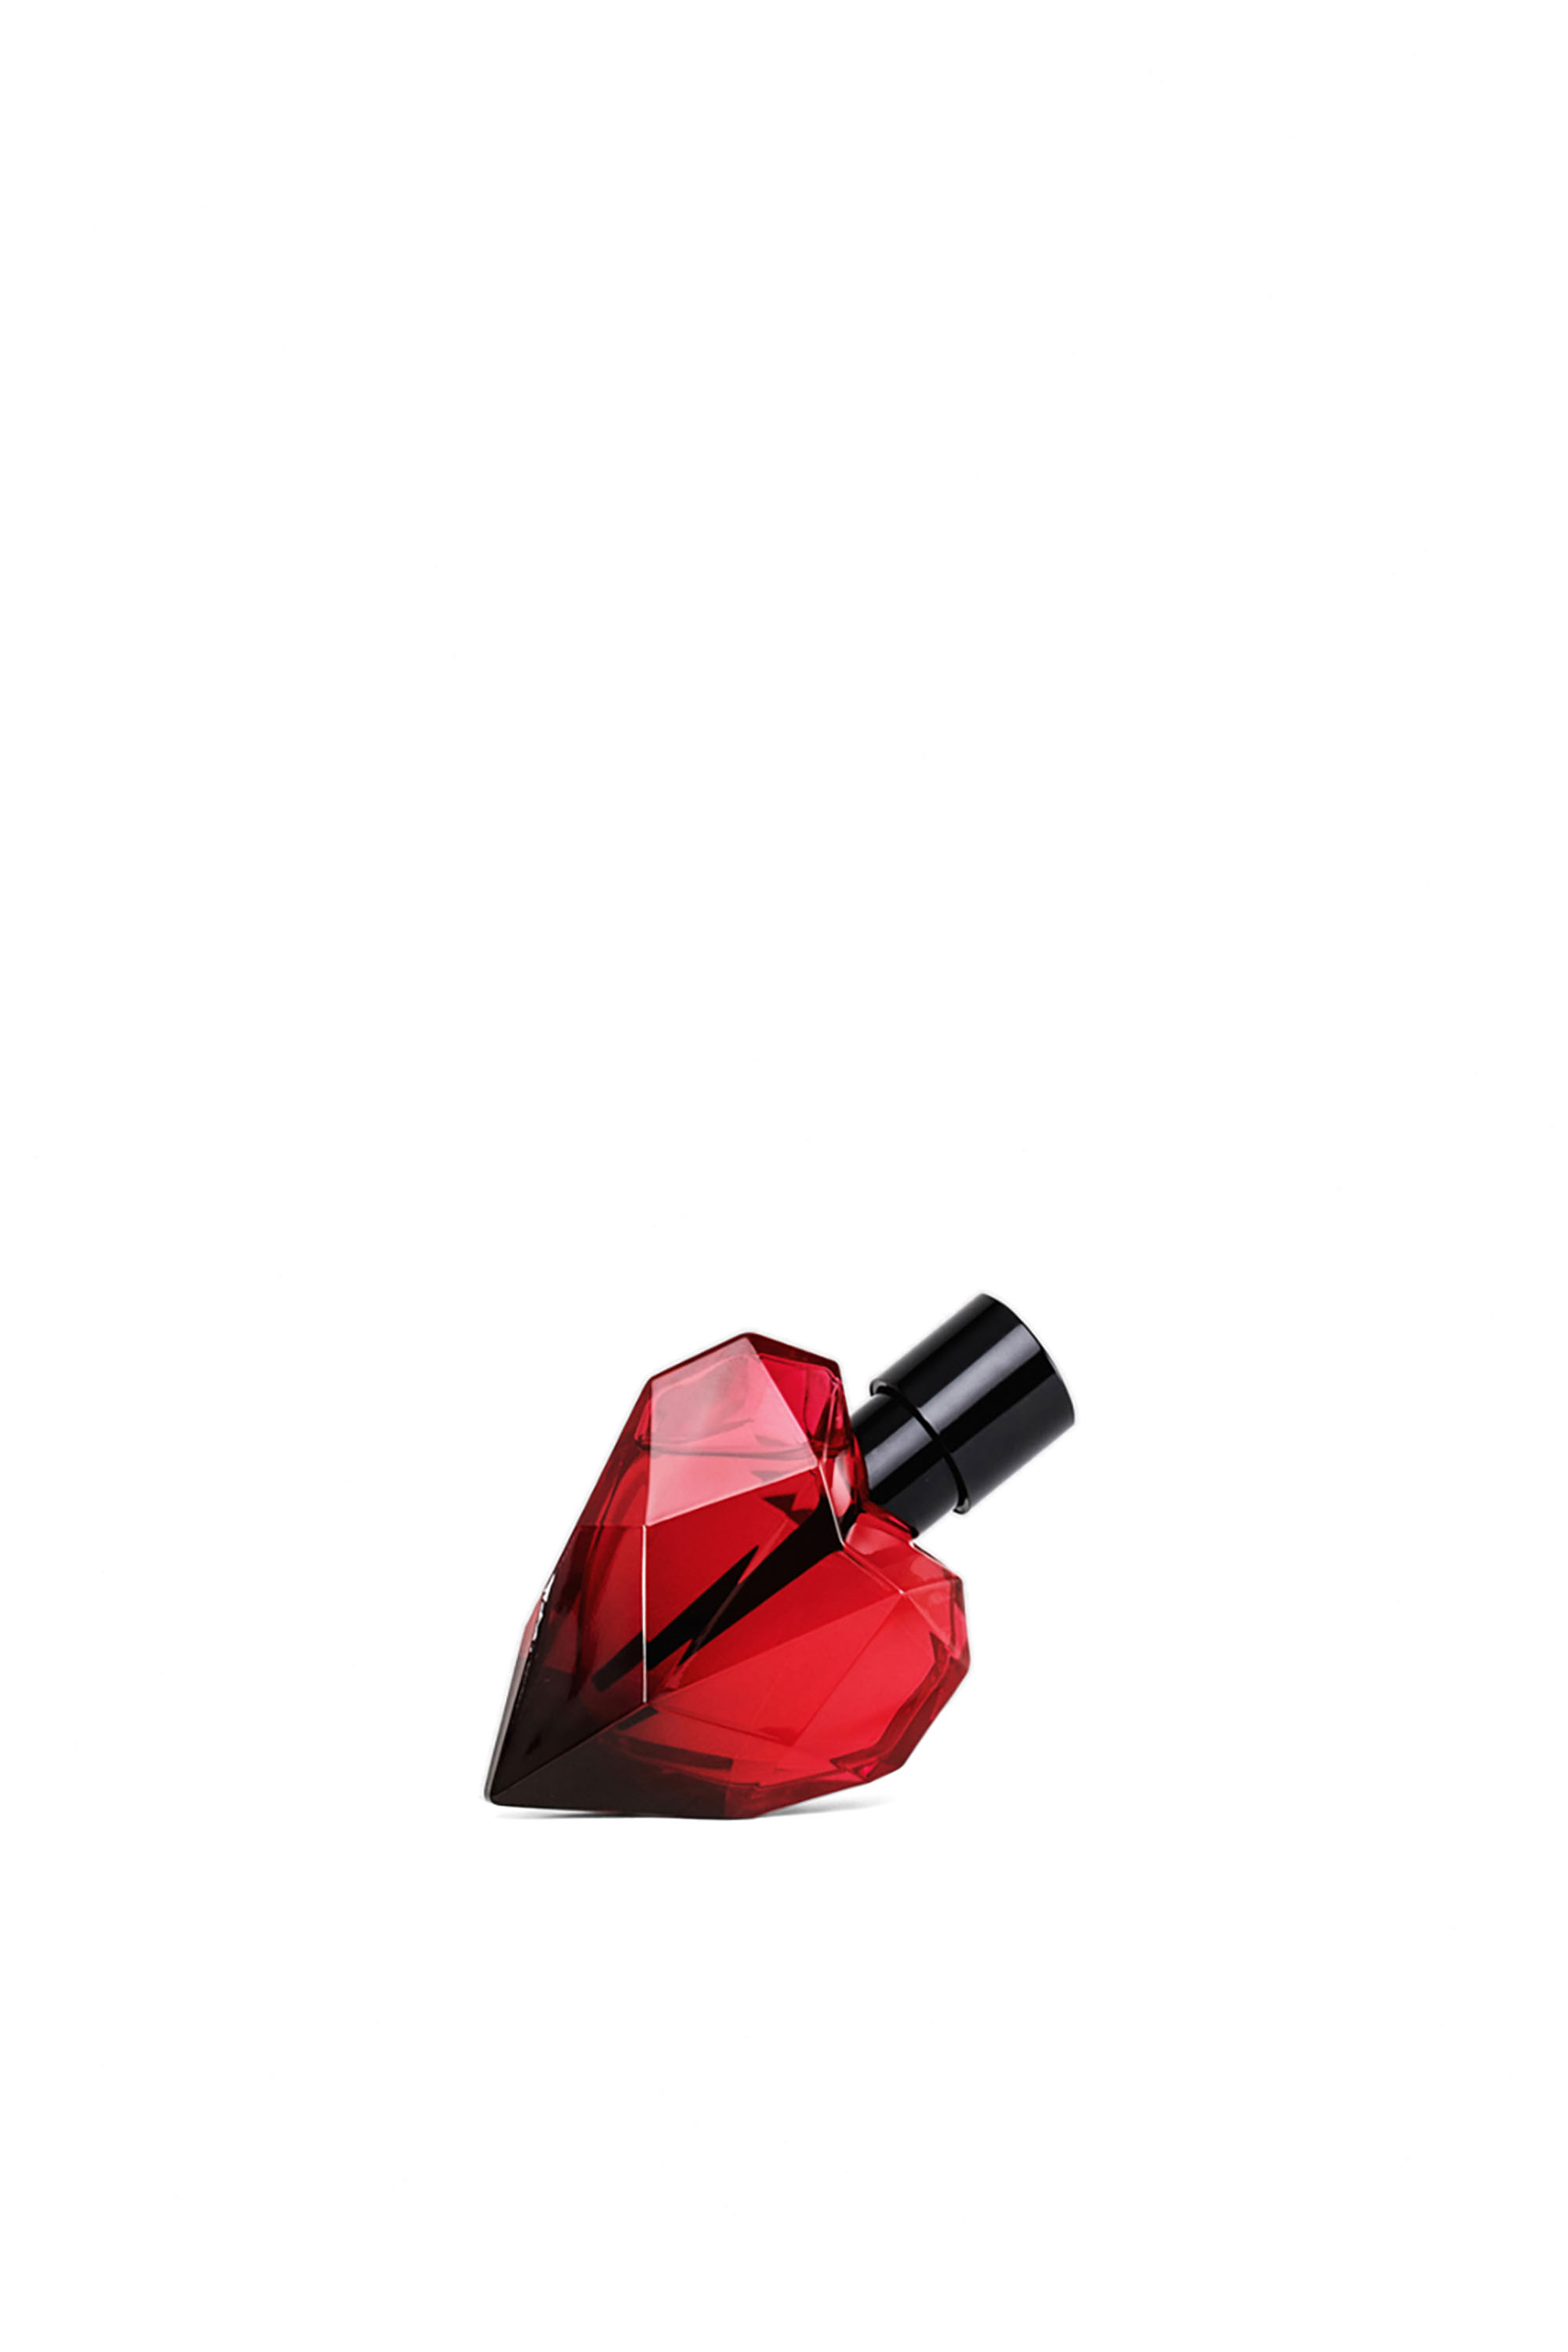 Diesel - LOVERDOSE RED KISS EAU DE PARFUM 30ML, Red - Image 1